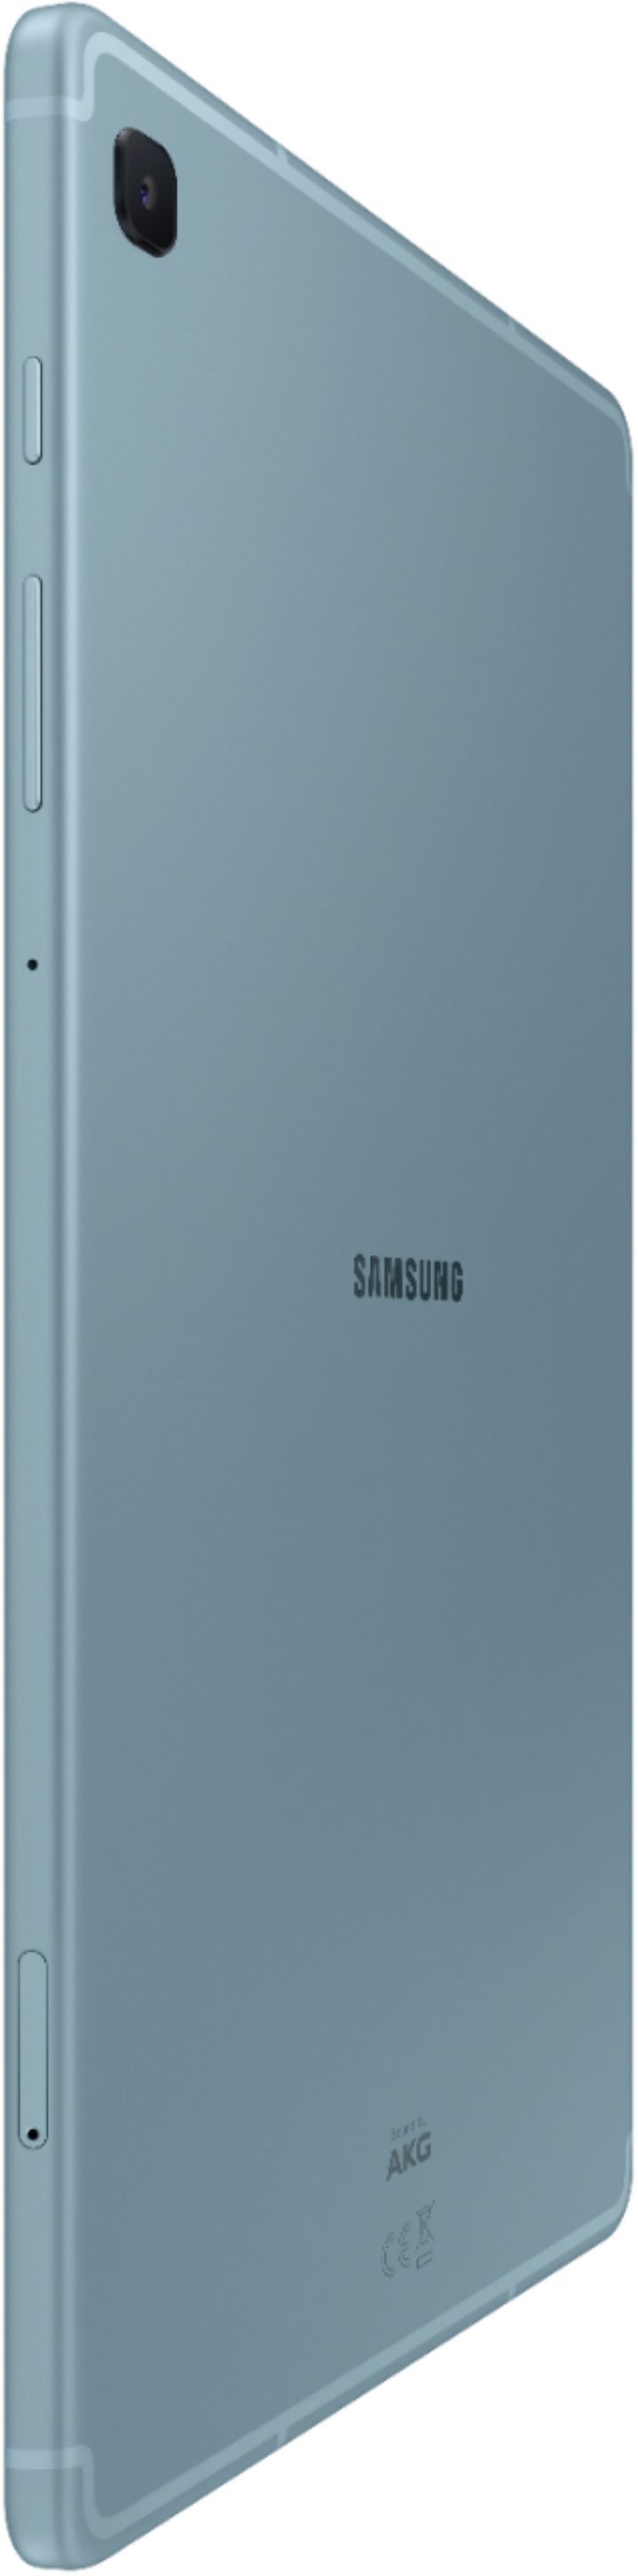 Best Buy: Samsung Galaxy Tab S6 Lite 10.4